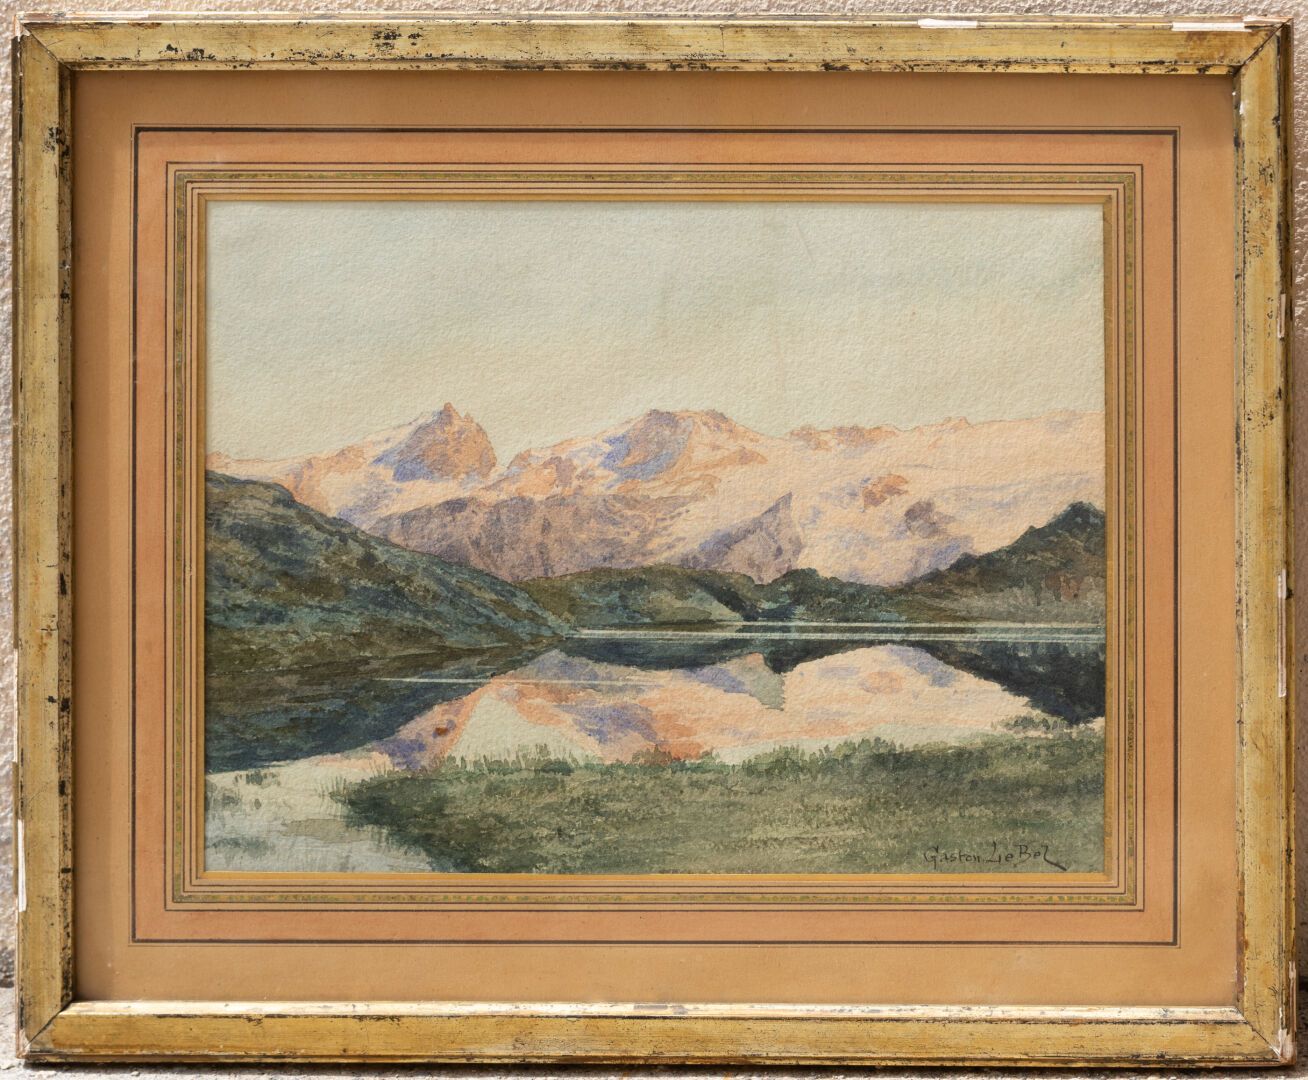 Gaston LE BEL (XIX-XX) 山地景观

纸上水彩画

右下方有签名

H.21.5厘米。L. 29 cm